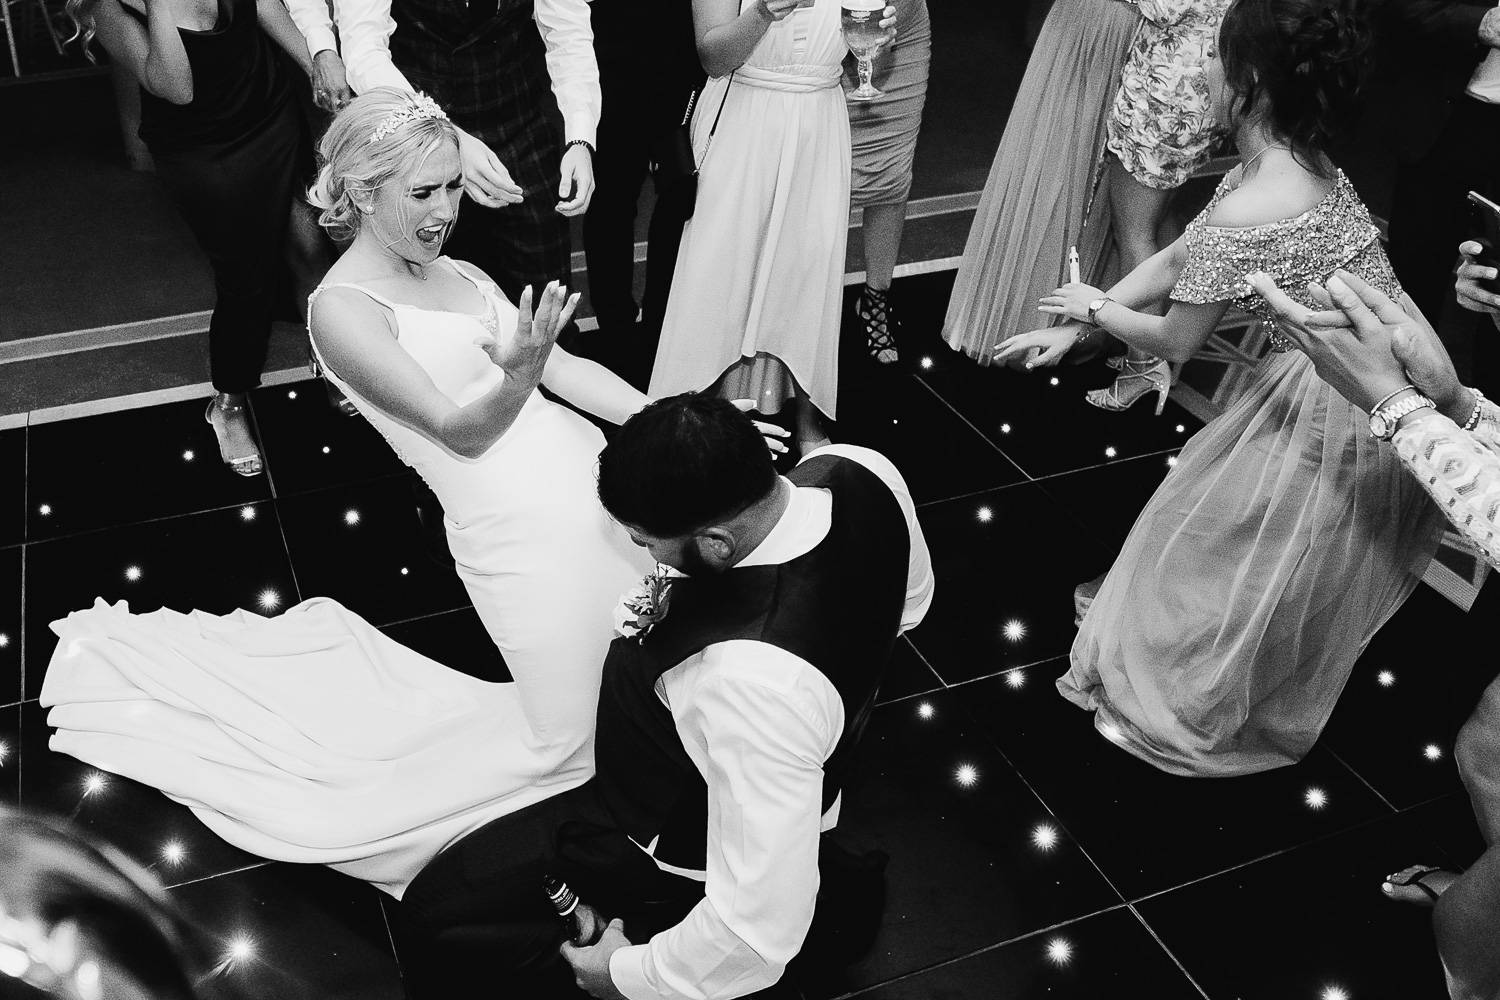 Bride and groom on the dance floor